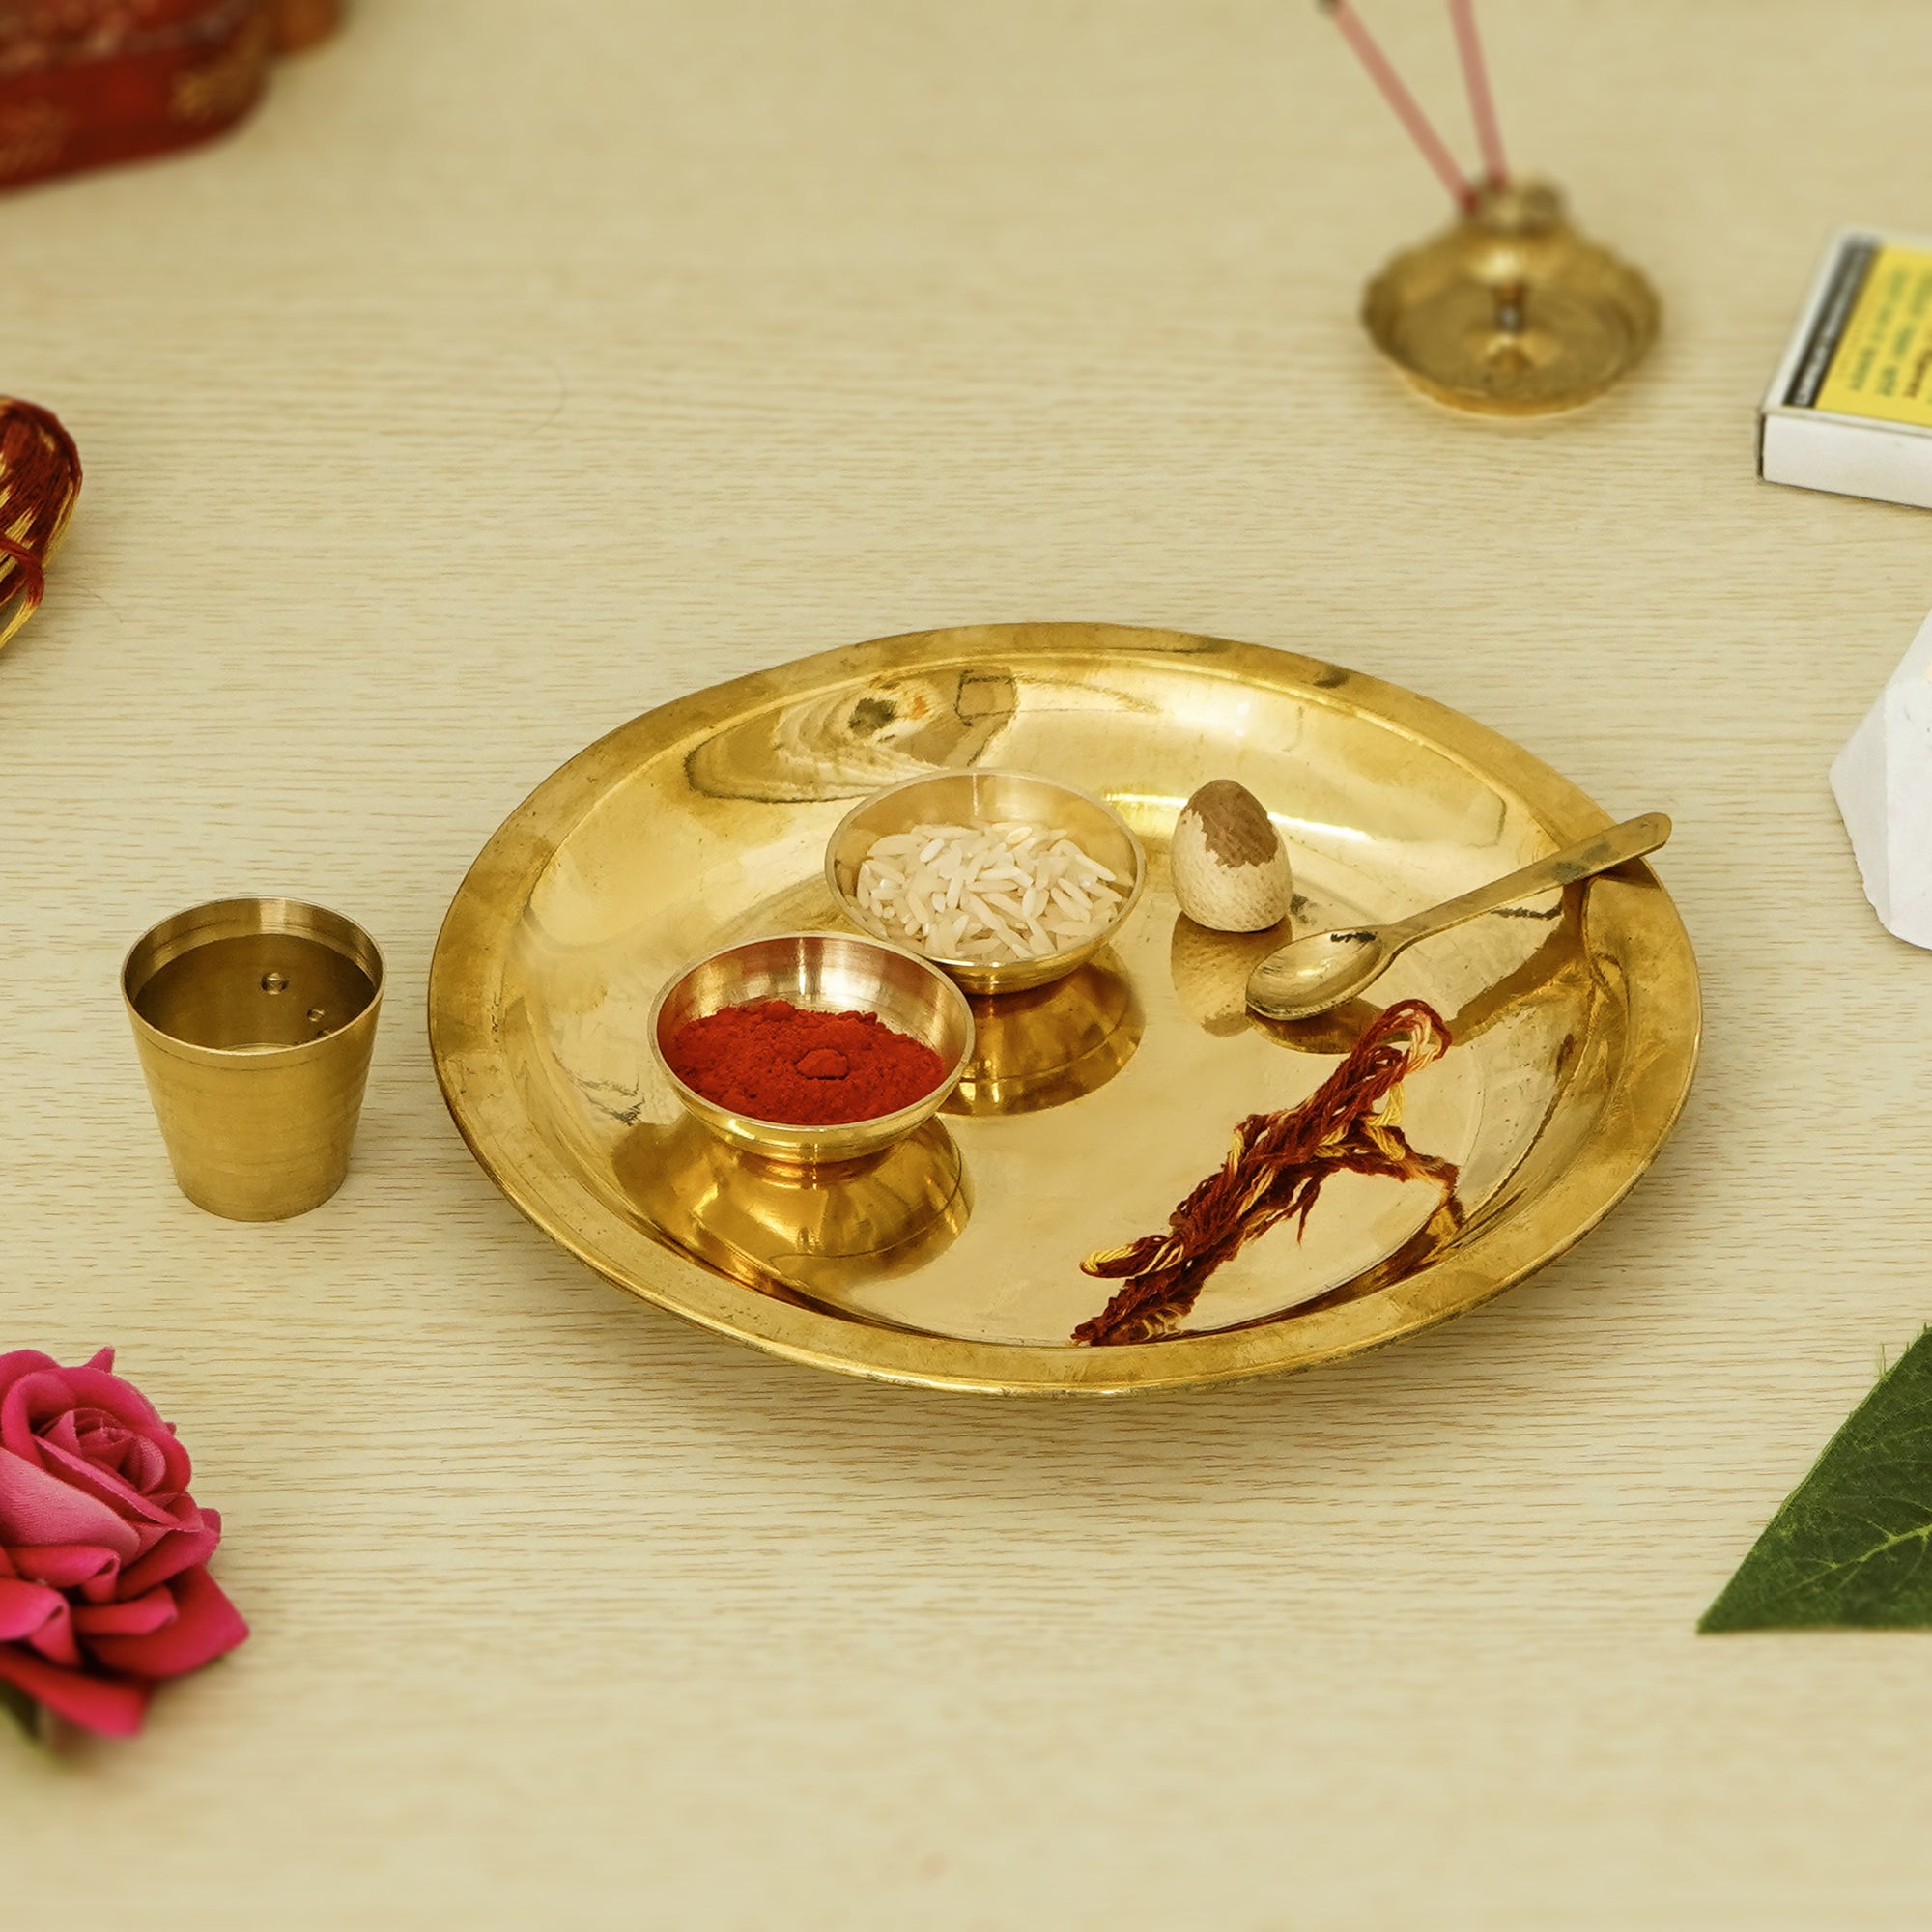 7 Inch Brass Pooja Thali with 2 Katori/Bowls, 1 Spoon and 1 Glass 1